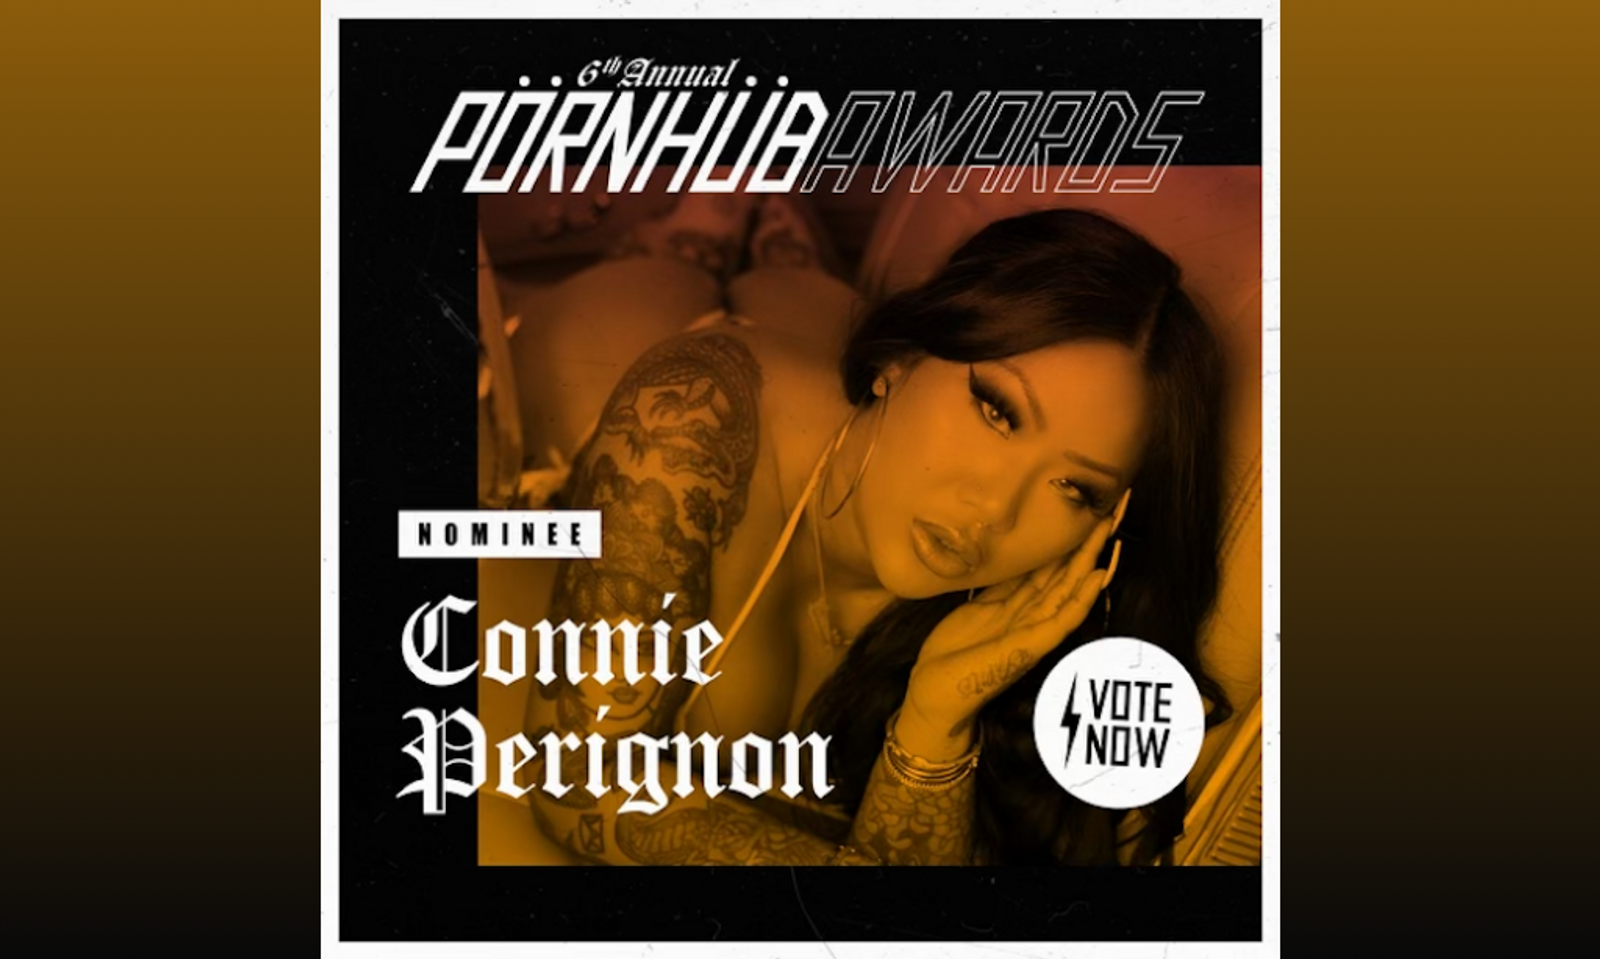 Connie Perignon Earns Two Pornhub Award Nominations